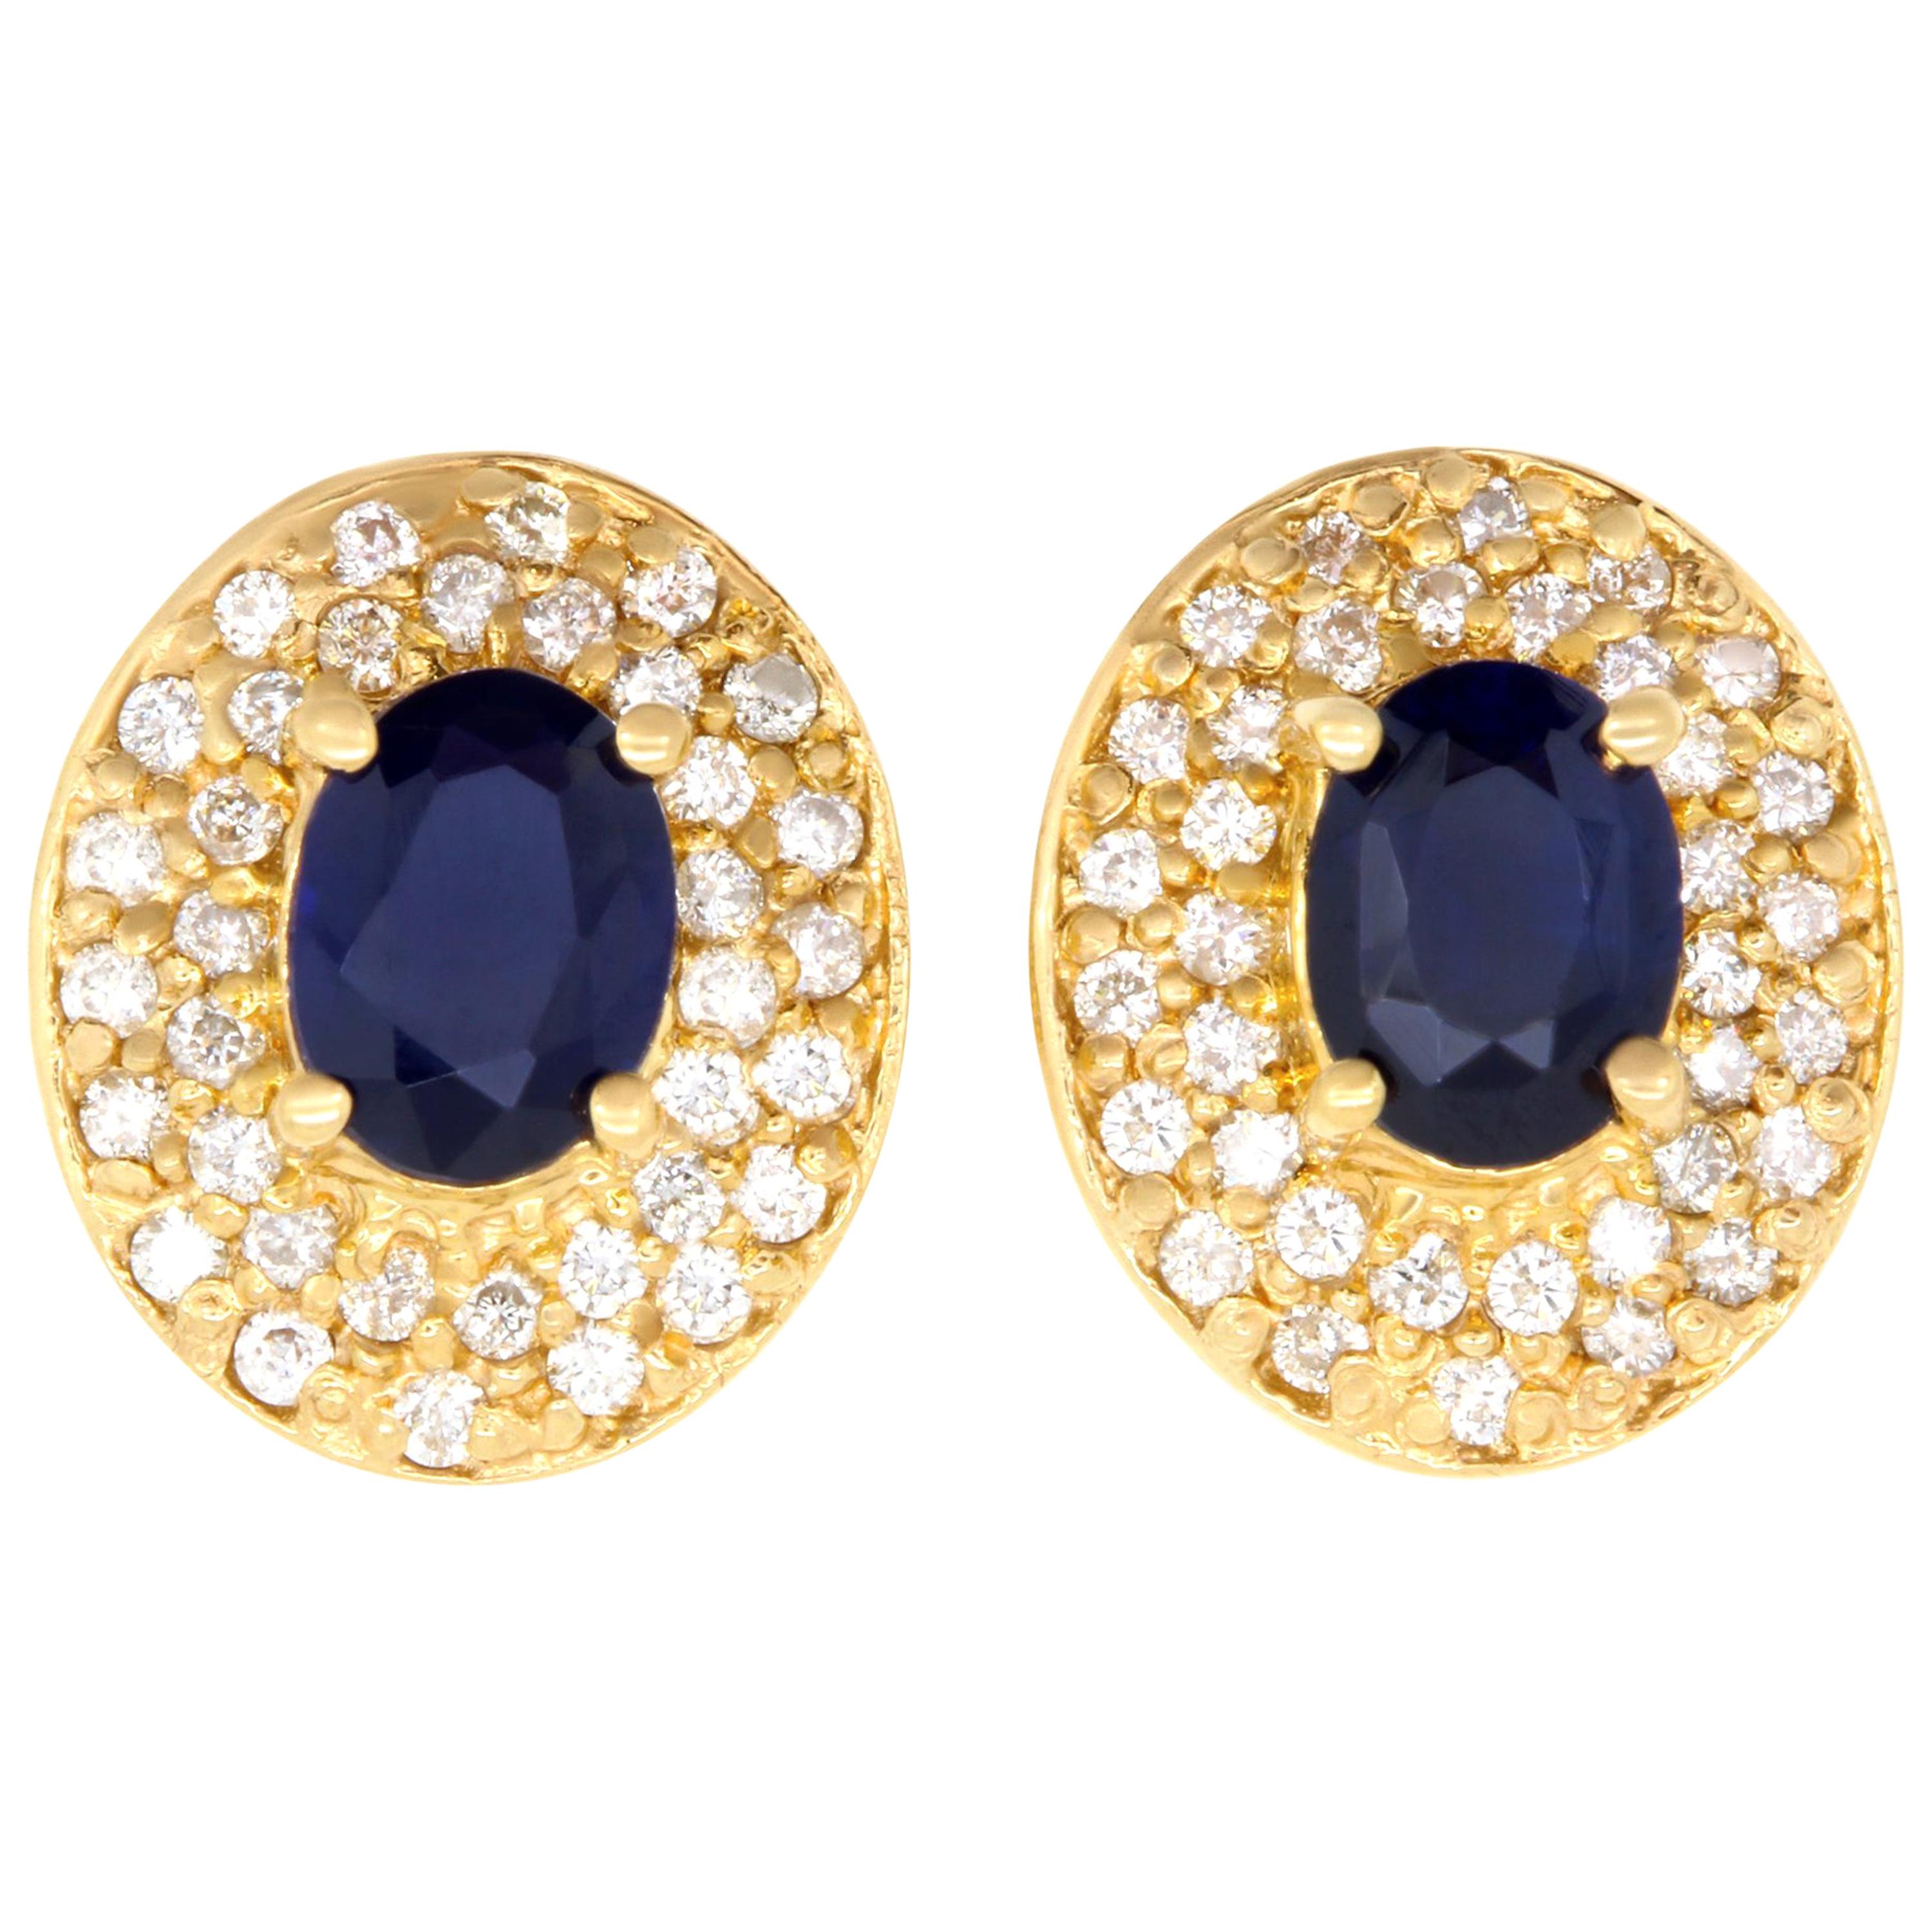 1.80 Carat Oval Blue Sapphire and .72 Carat Diamond Earrings